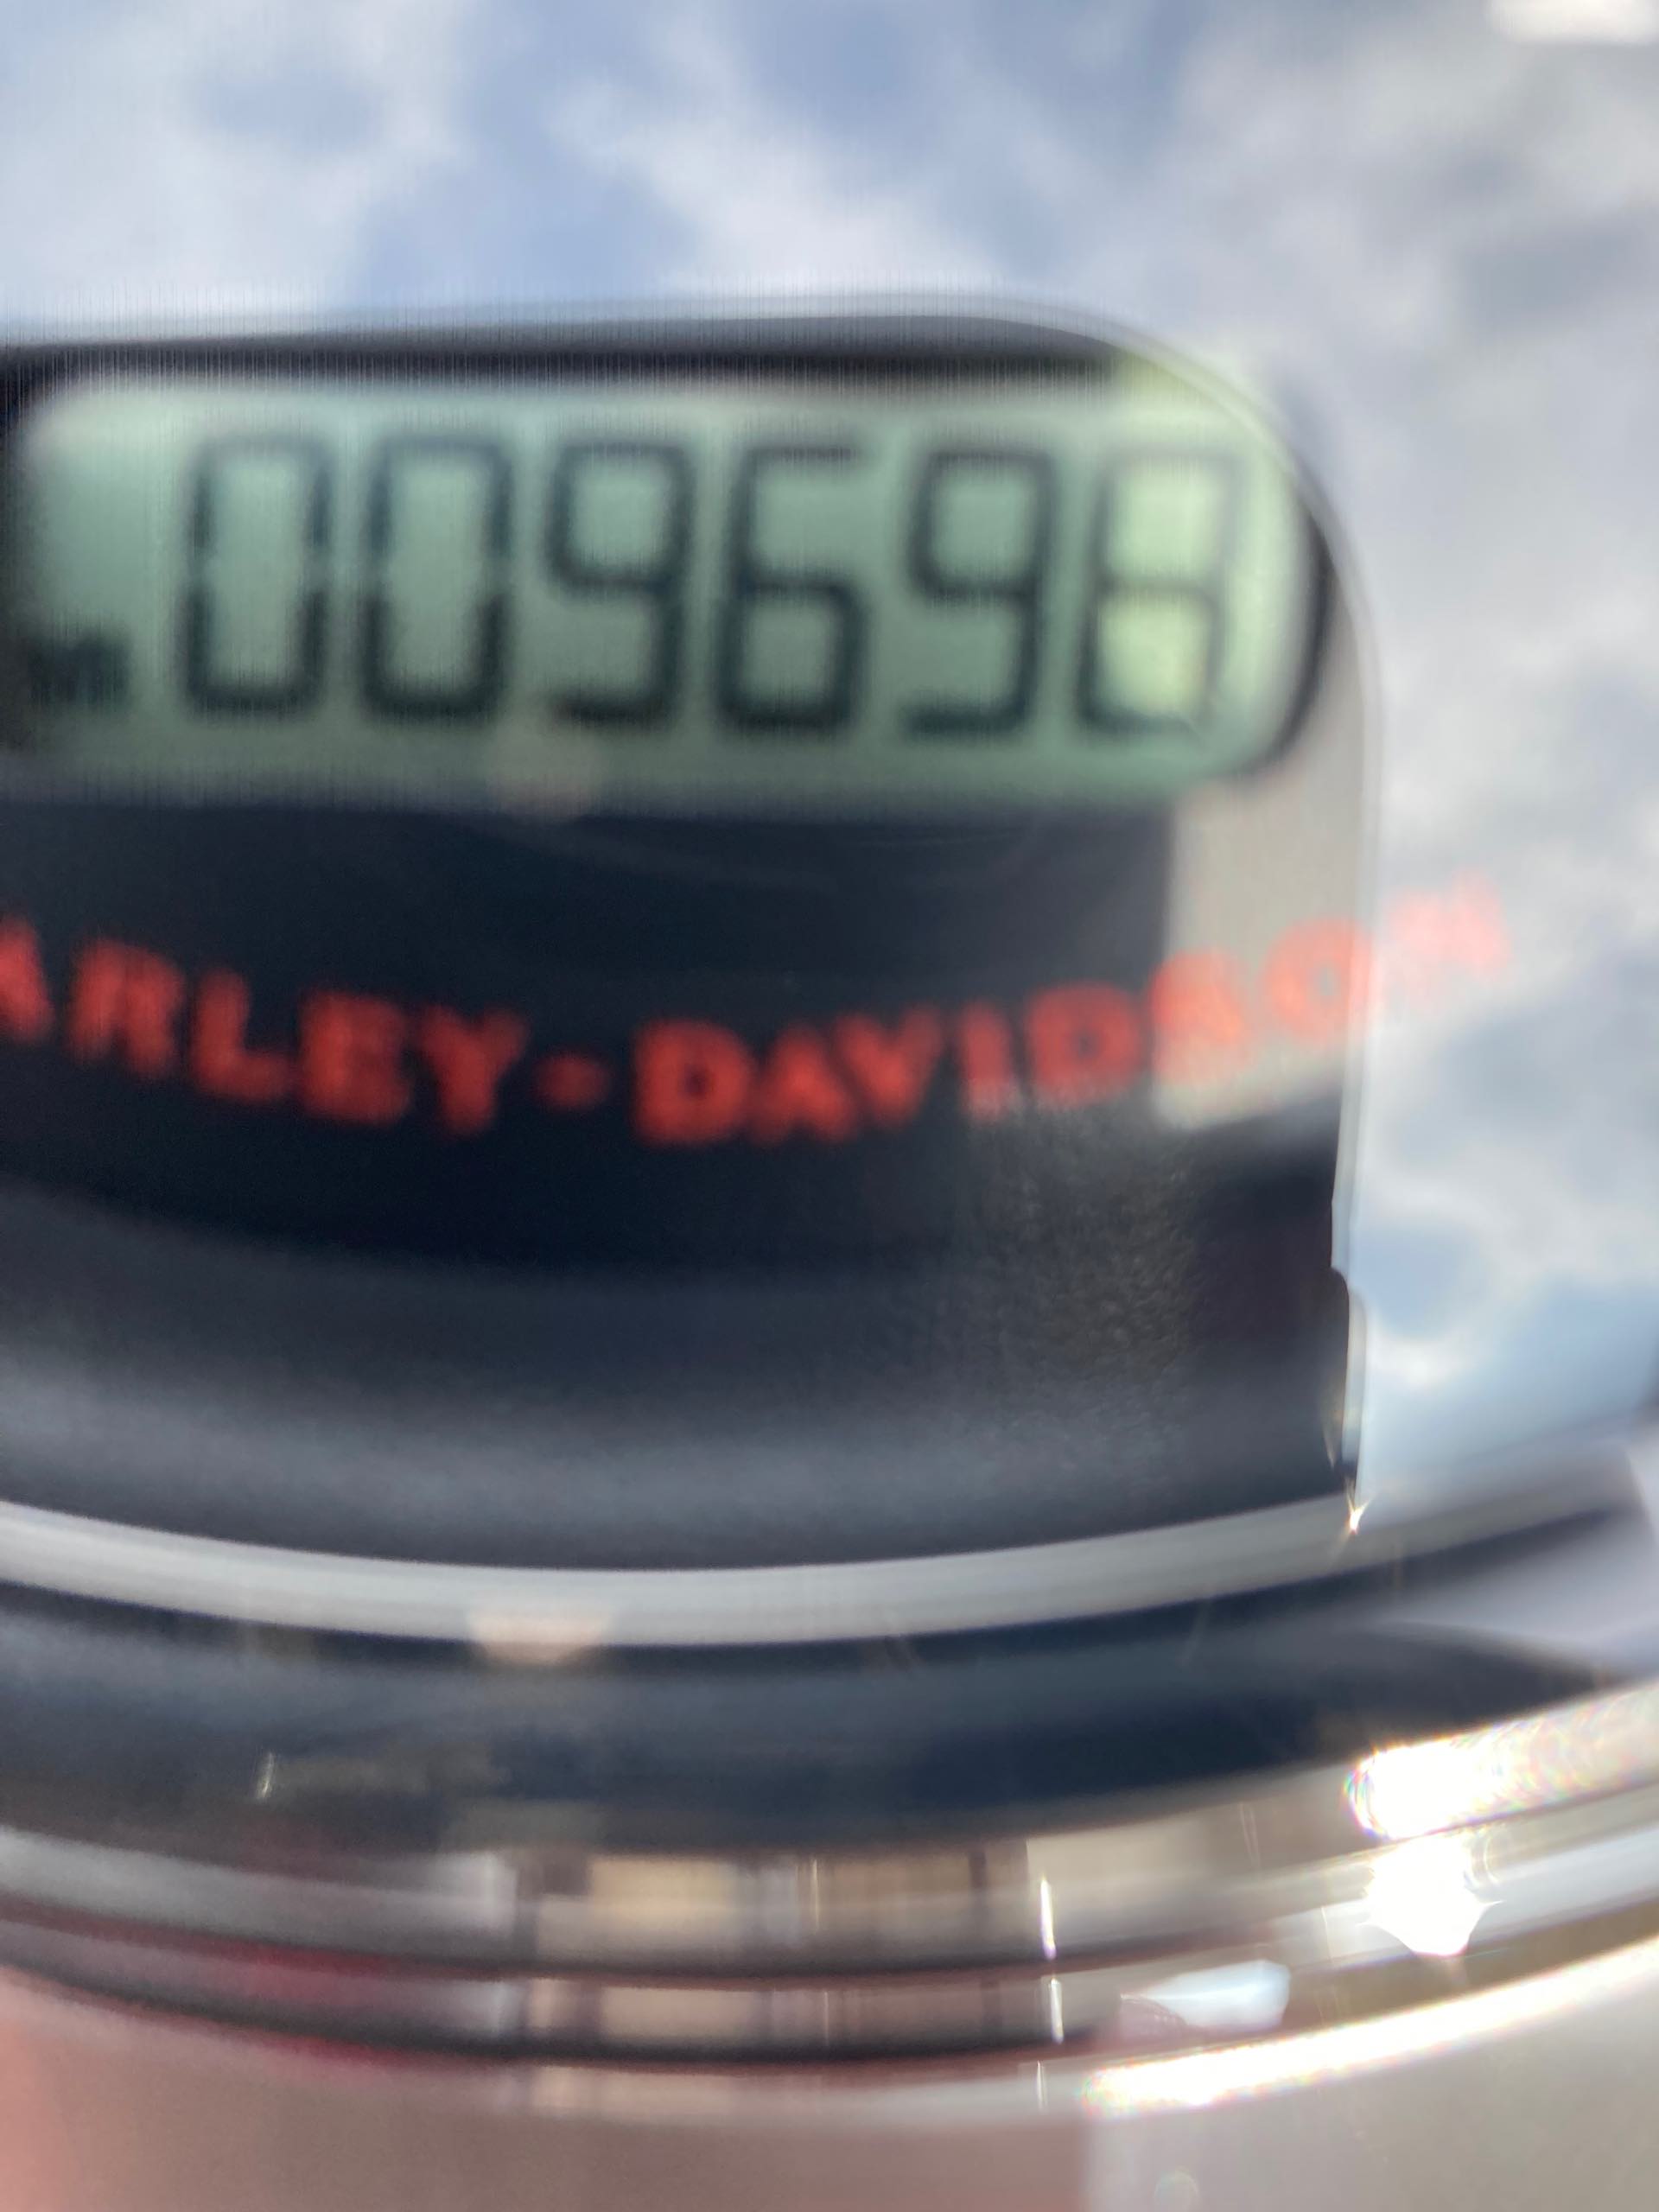 2018 Harley-Davidson Road King Base at 3 State Harley-Davidson